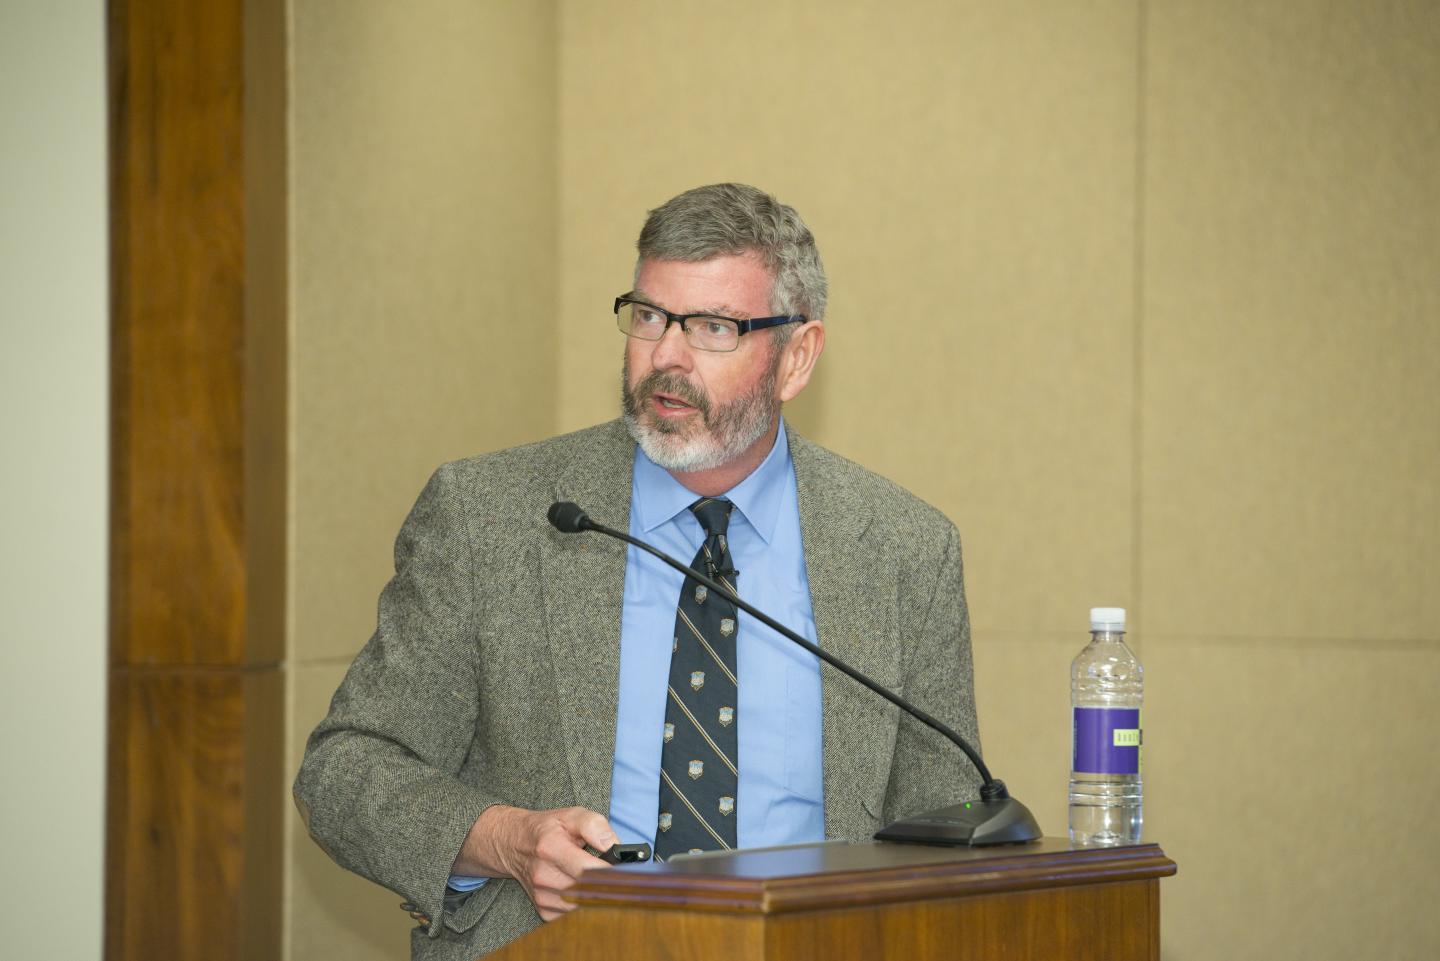 Senior author Scott Weaver, University of Texas Medical Branch at Galveston